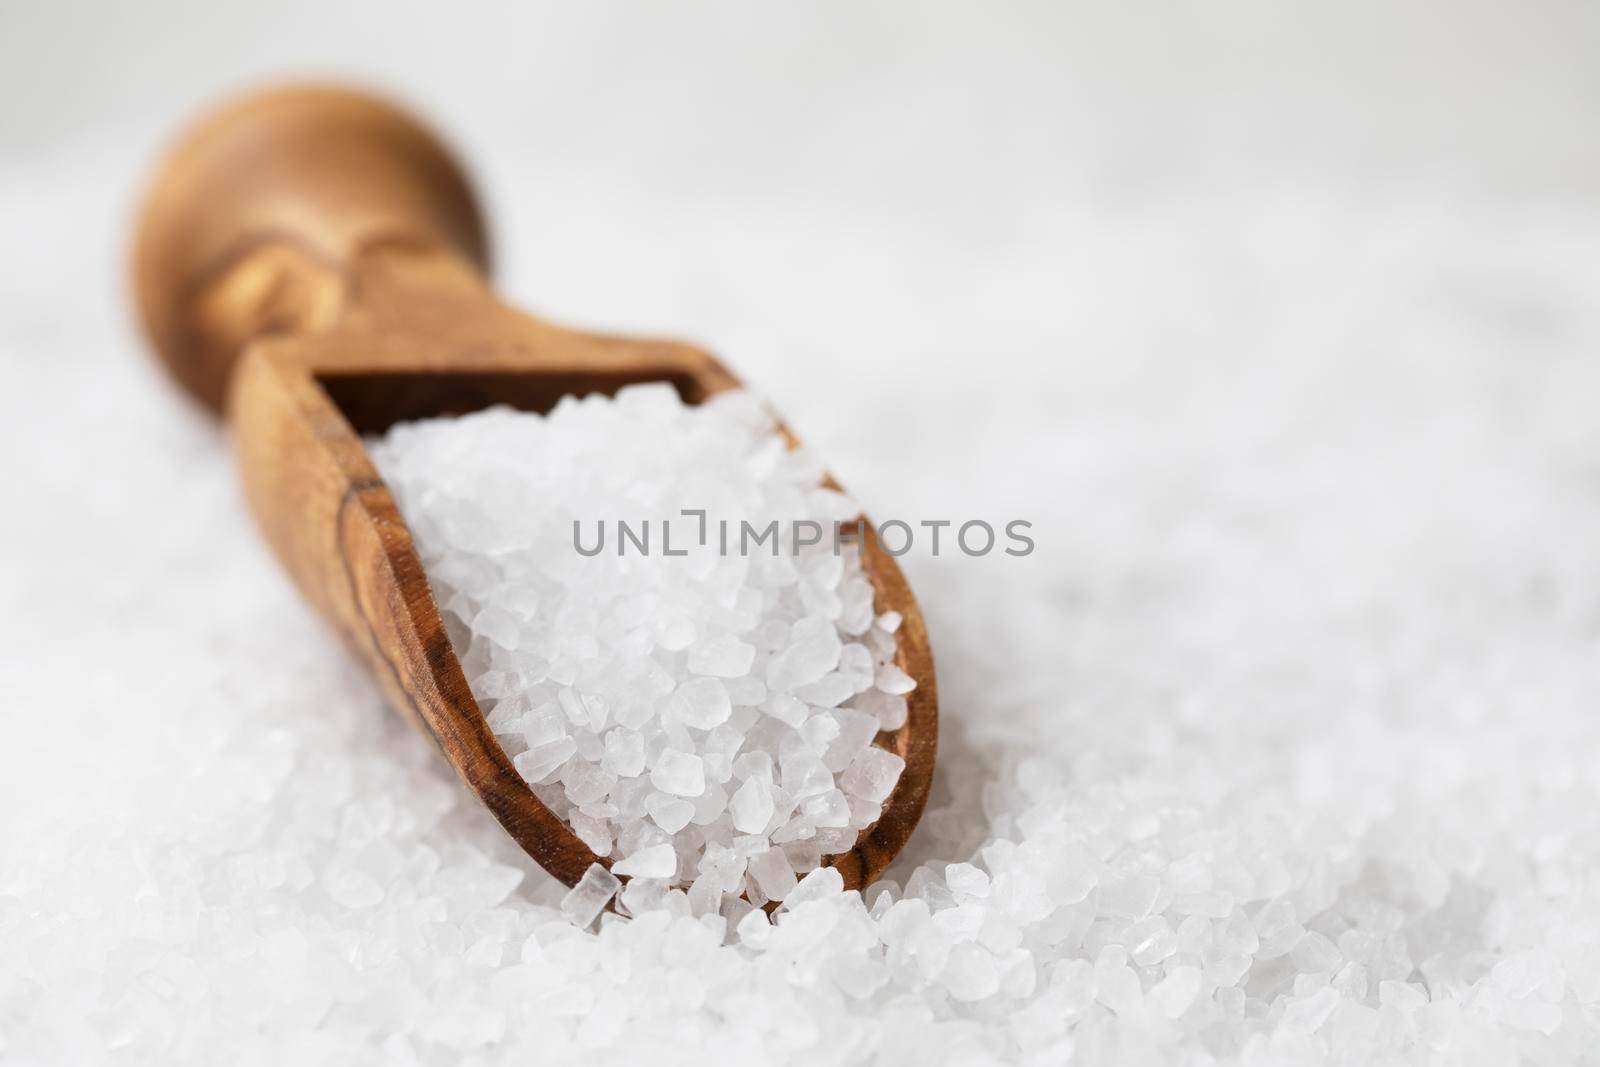 Salt Crystals in Wooden Scoop by charlotteLake